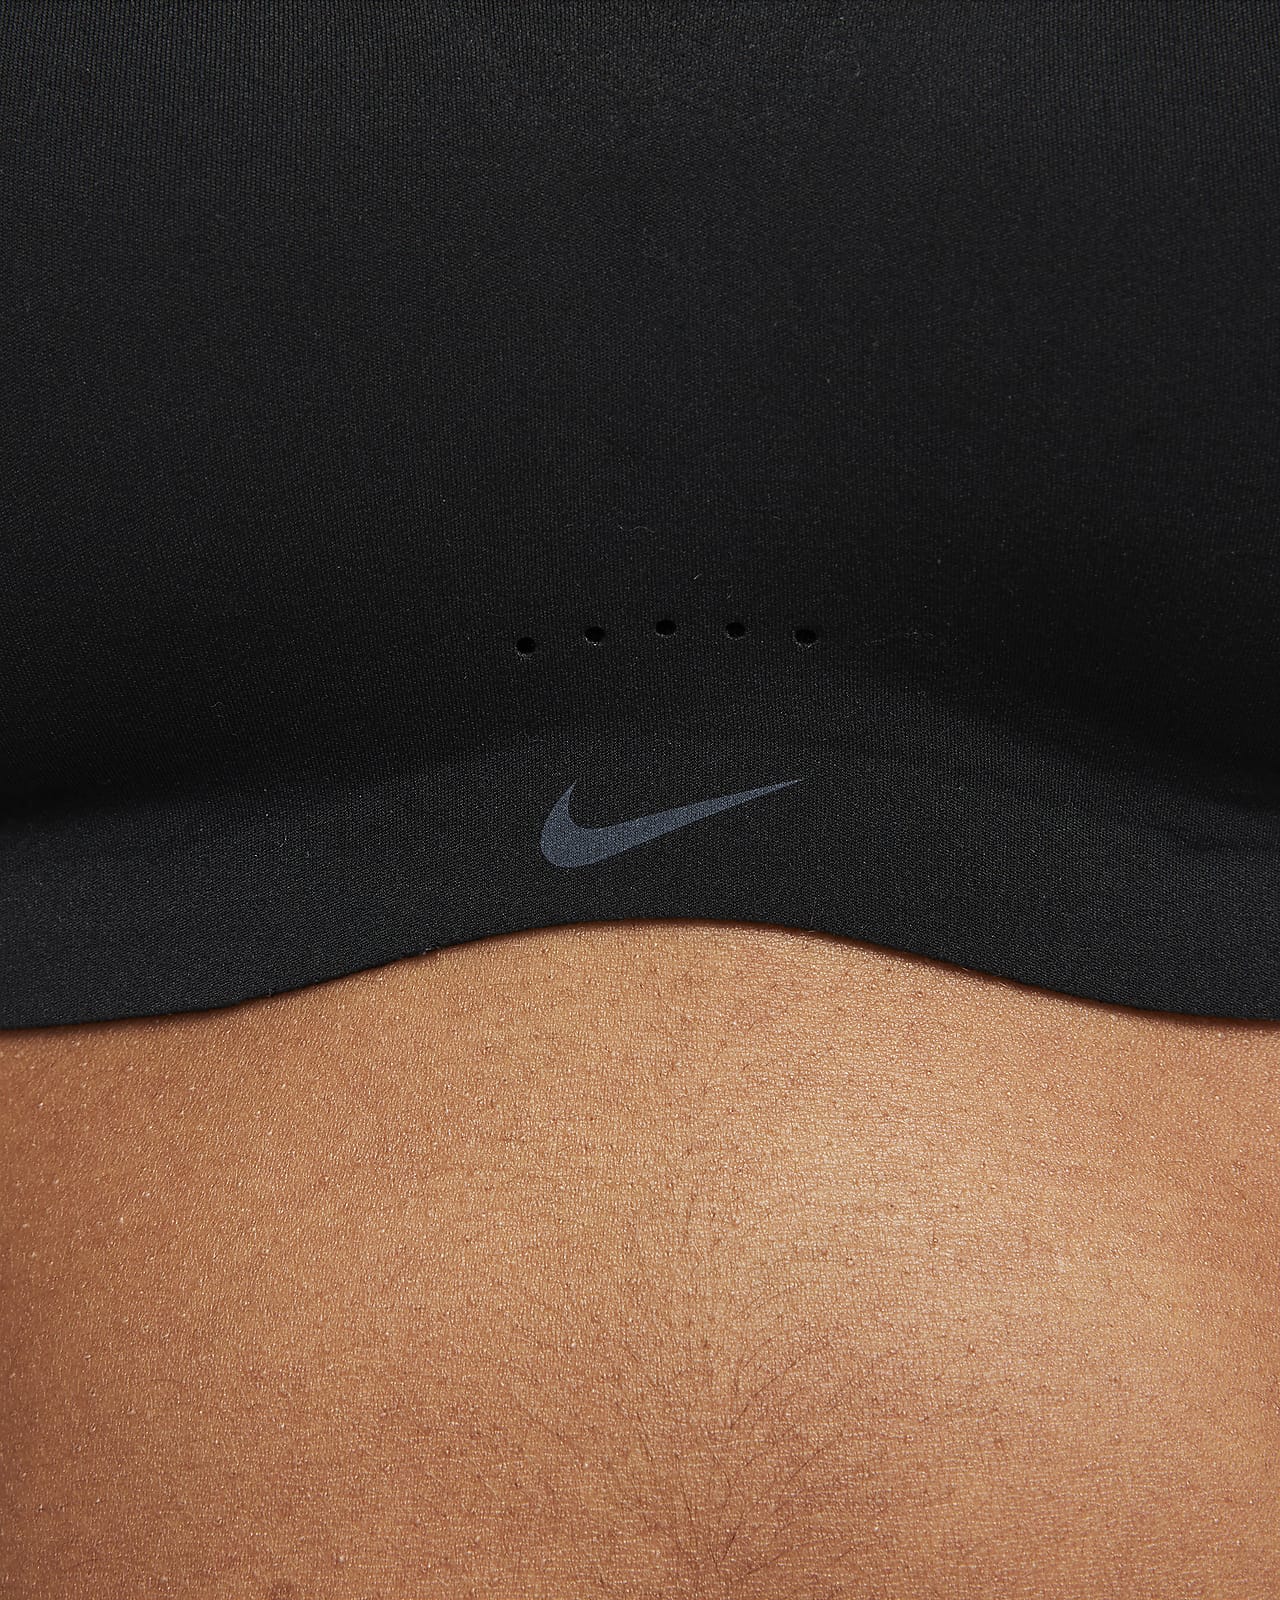 Women's Nike Alate Minimalist Sports Bra Size 2X (C-E) White